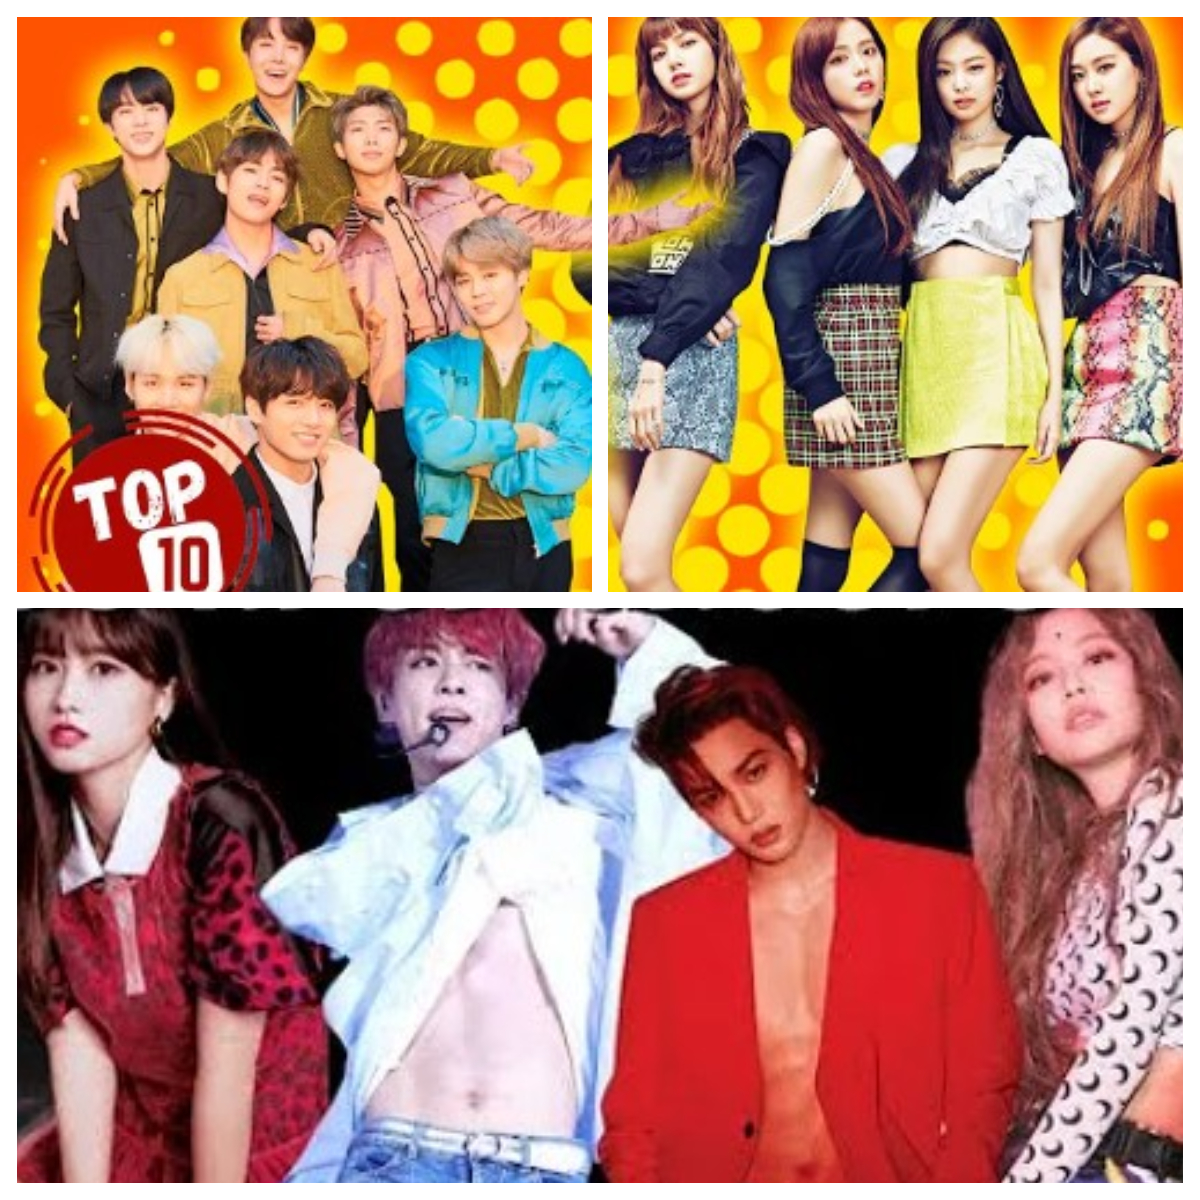 Top 10 most followed K-pop groups on Twitter